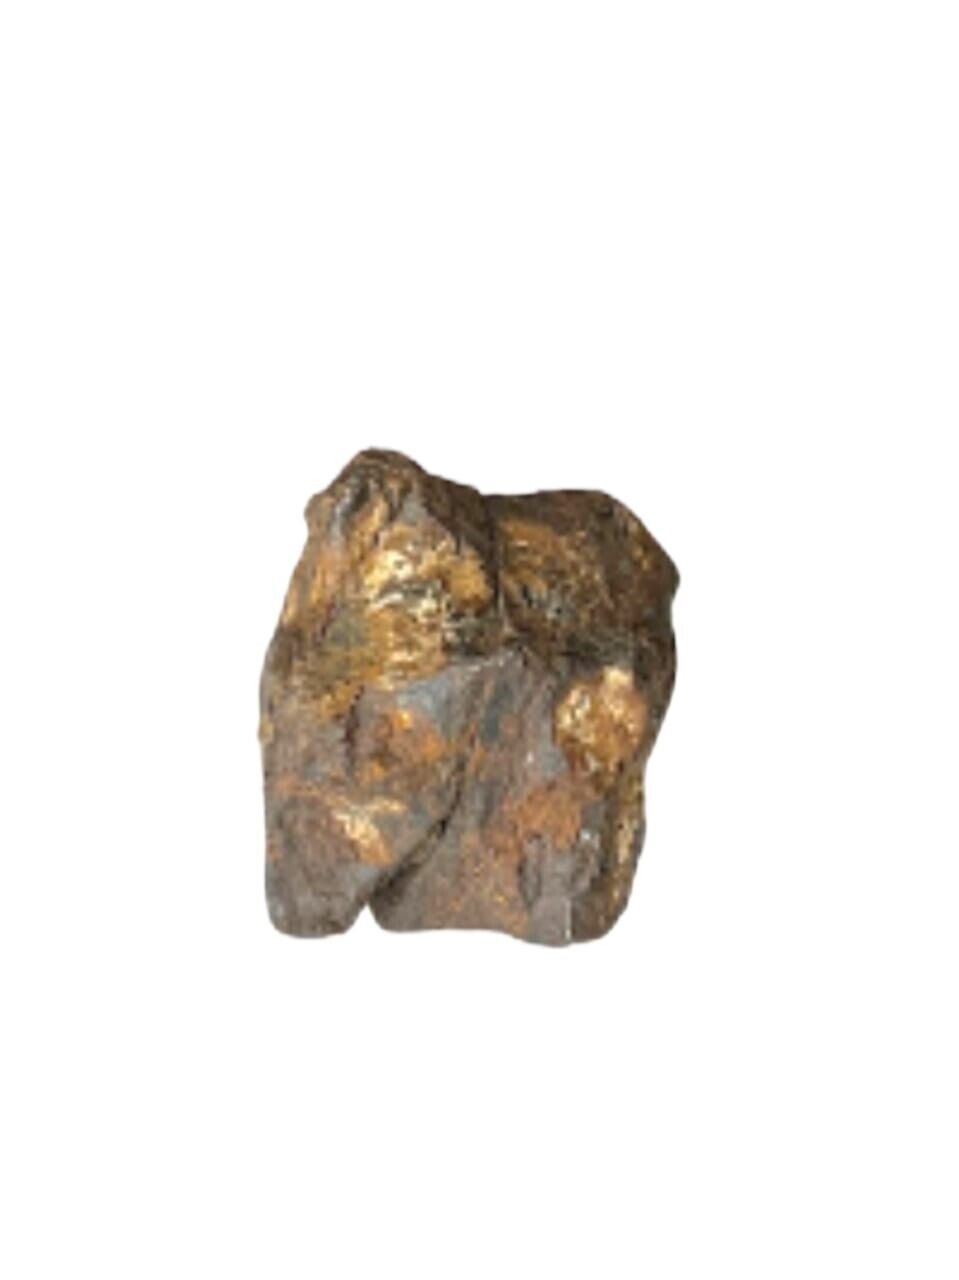 Odessa Meteorite Ector County Texas